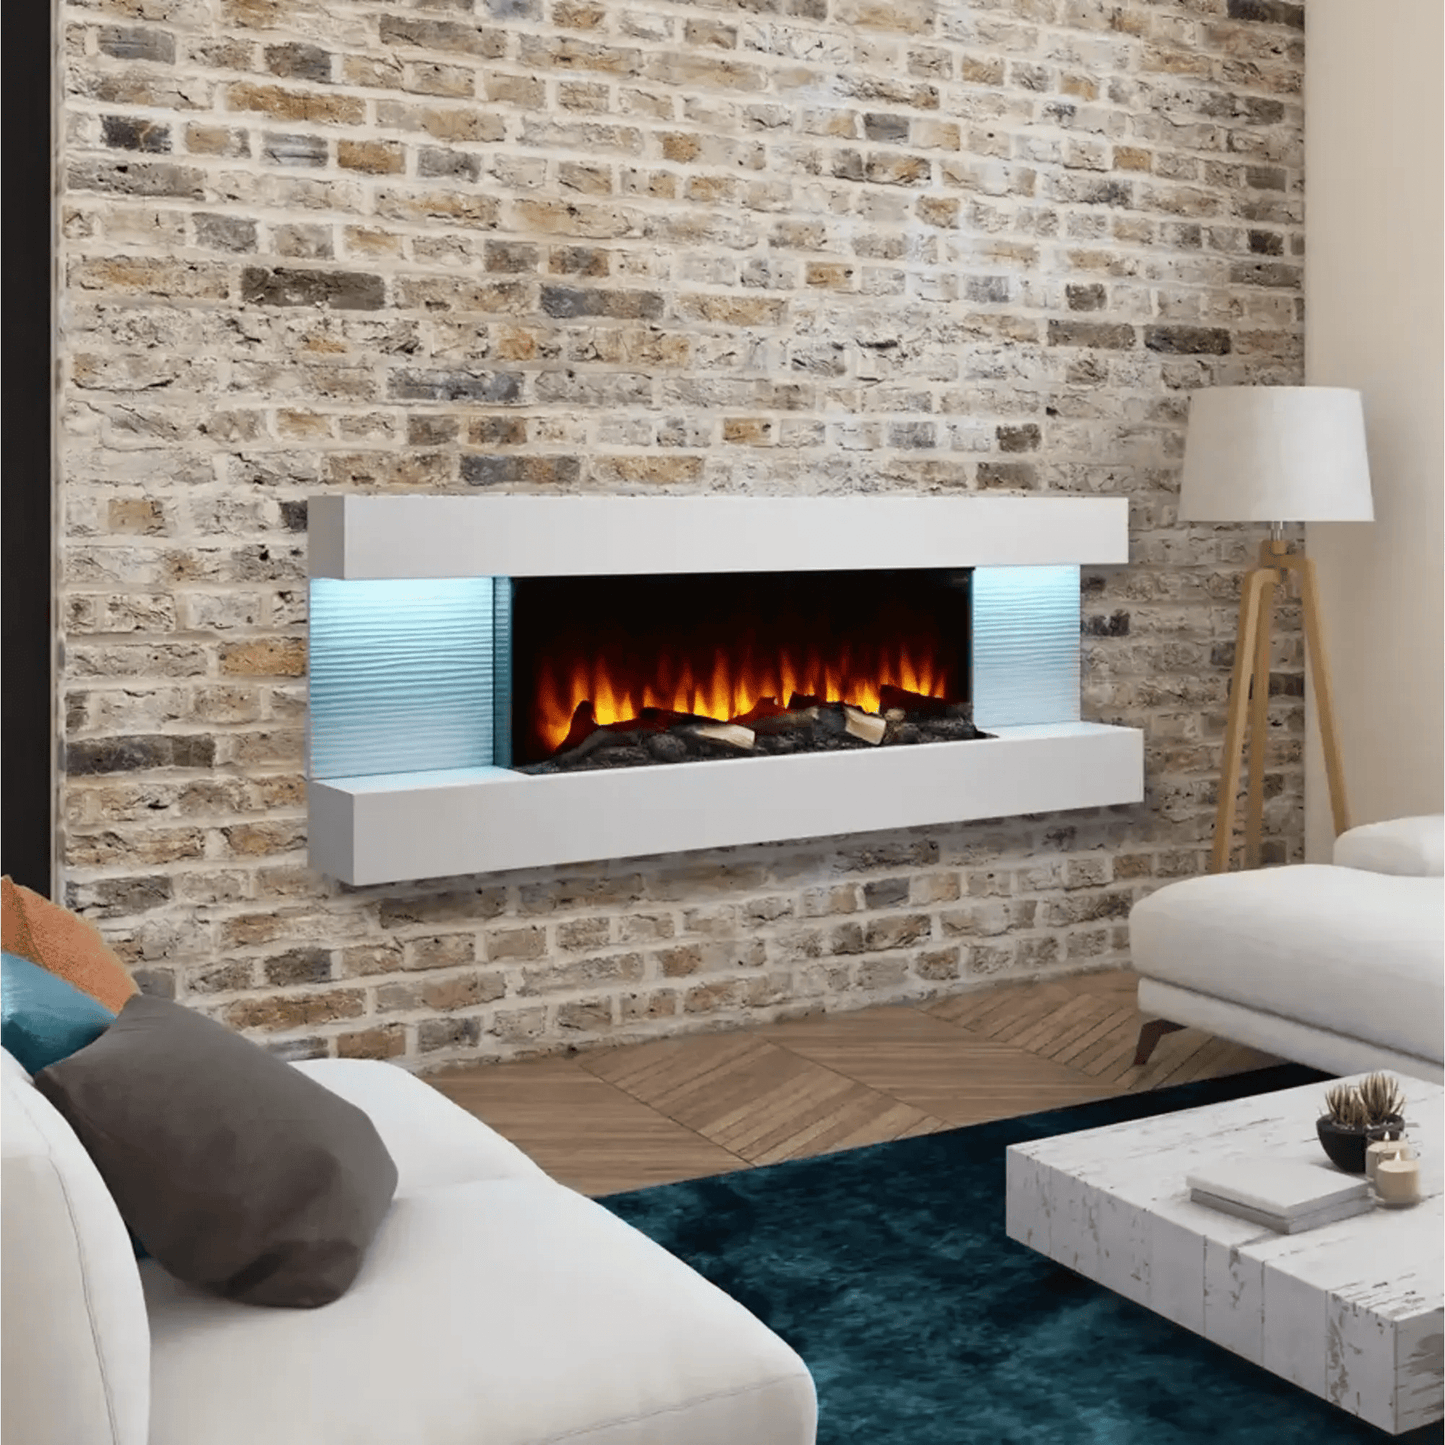 SimpliFire Format 36" Linear Electric Wall Mount Fireplace